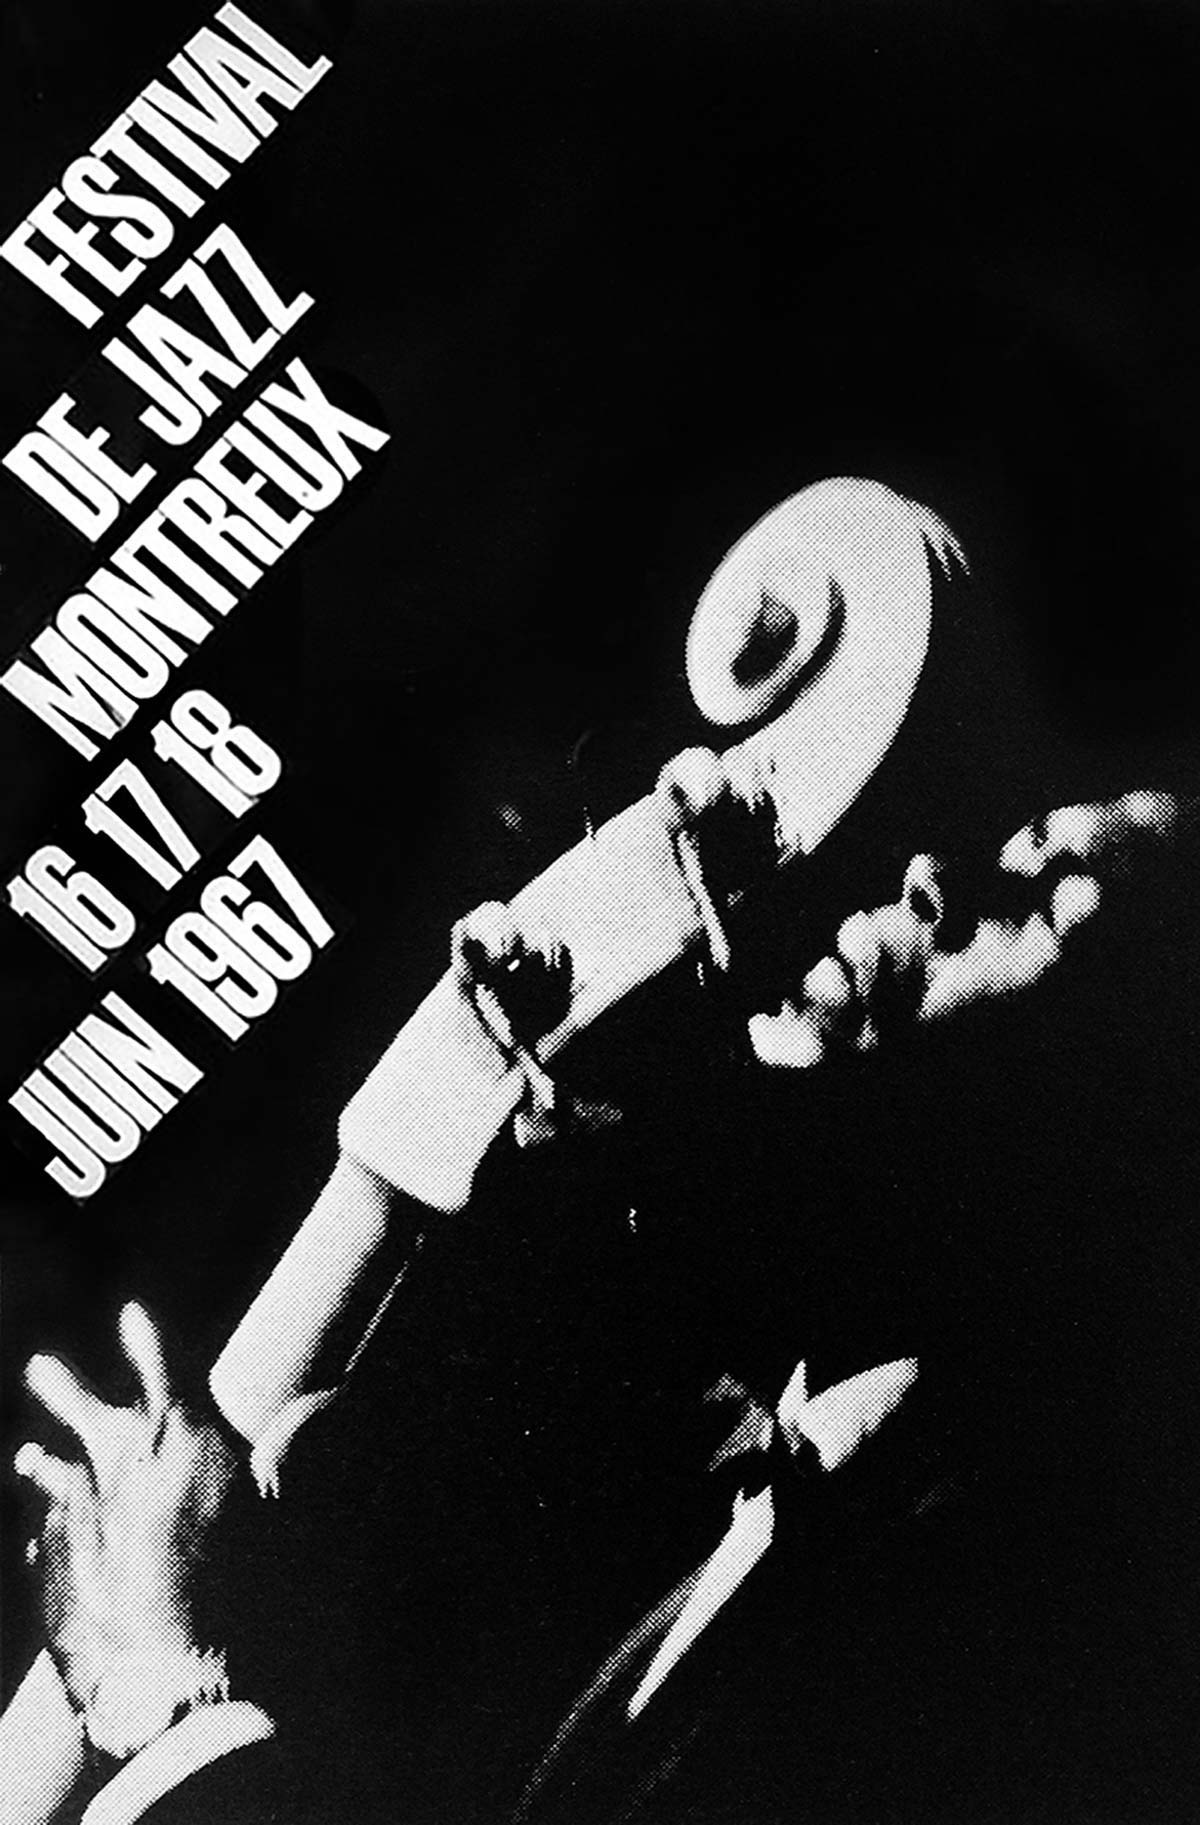 Плакат Джазового фестиваля в Монтро, автор Армандо Милани, 1967 год.